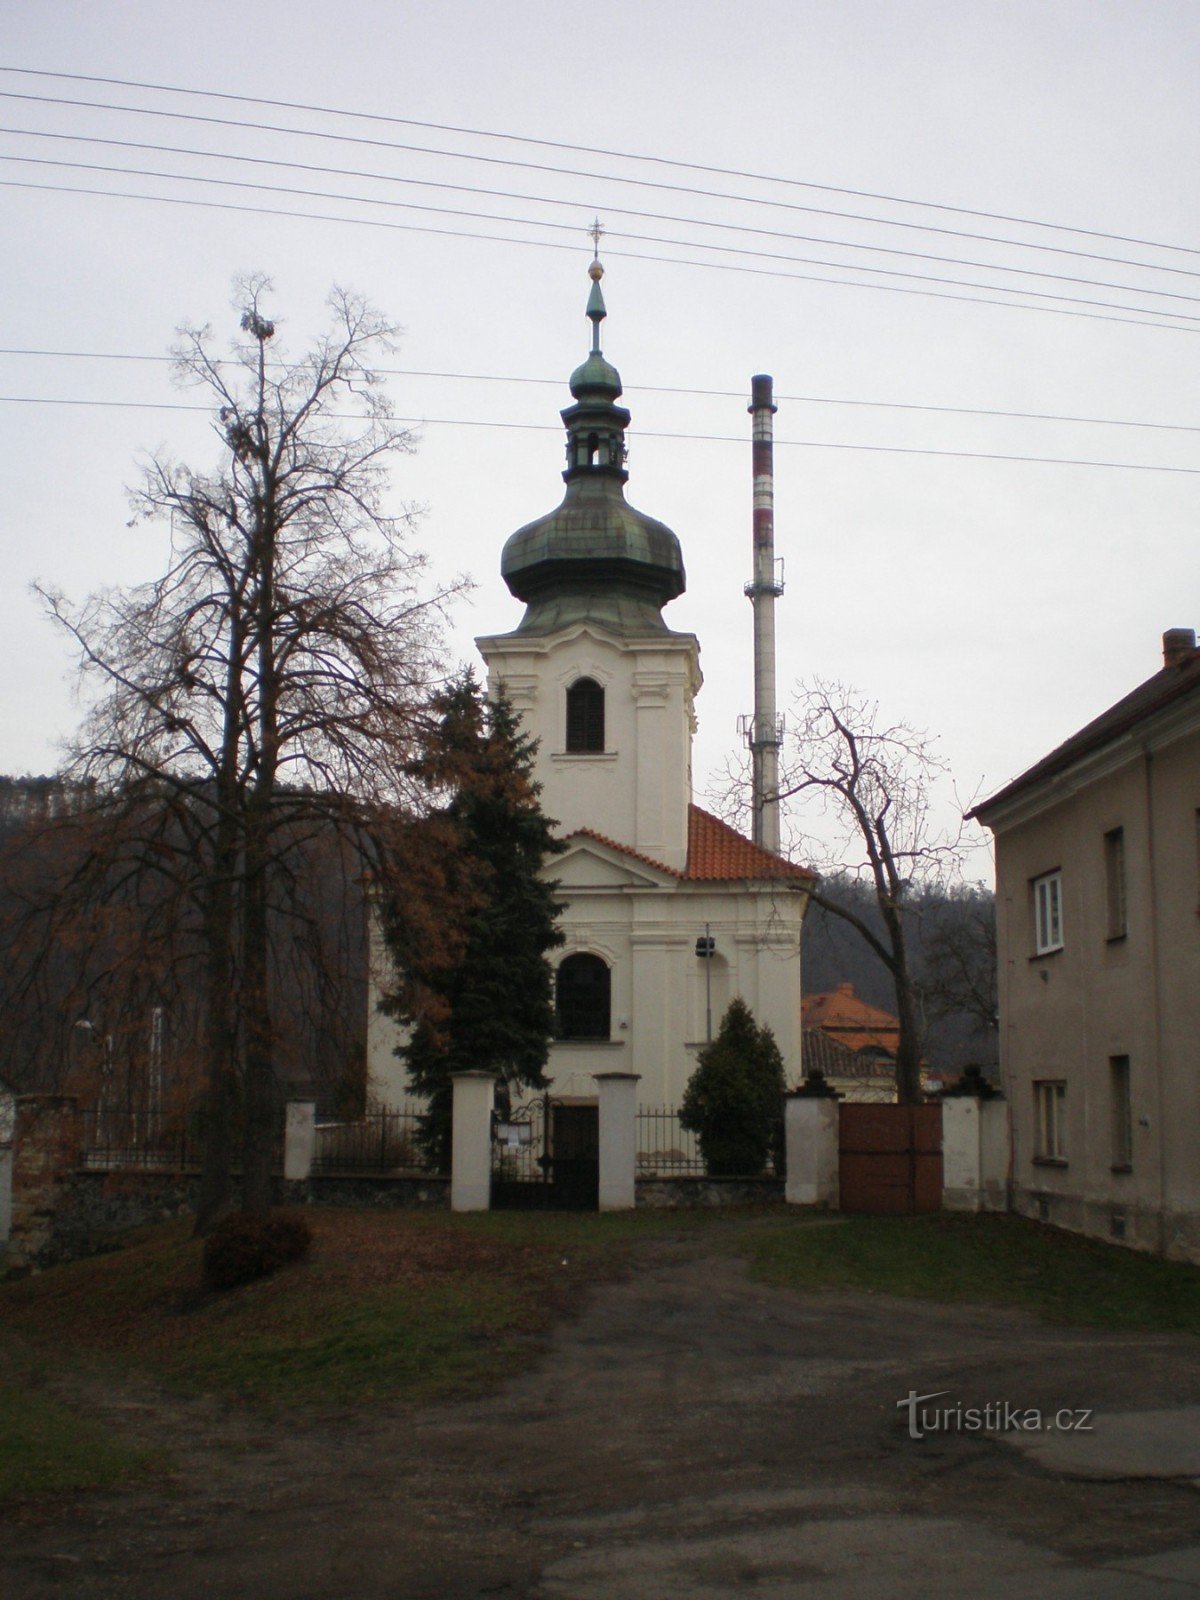 Libčice nad Vltavou - église de St. Barthélemy